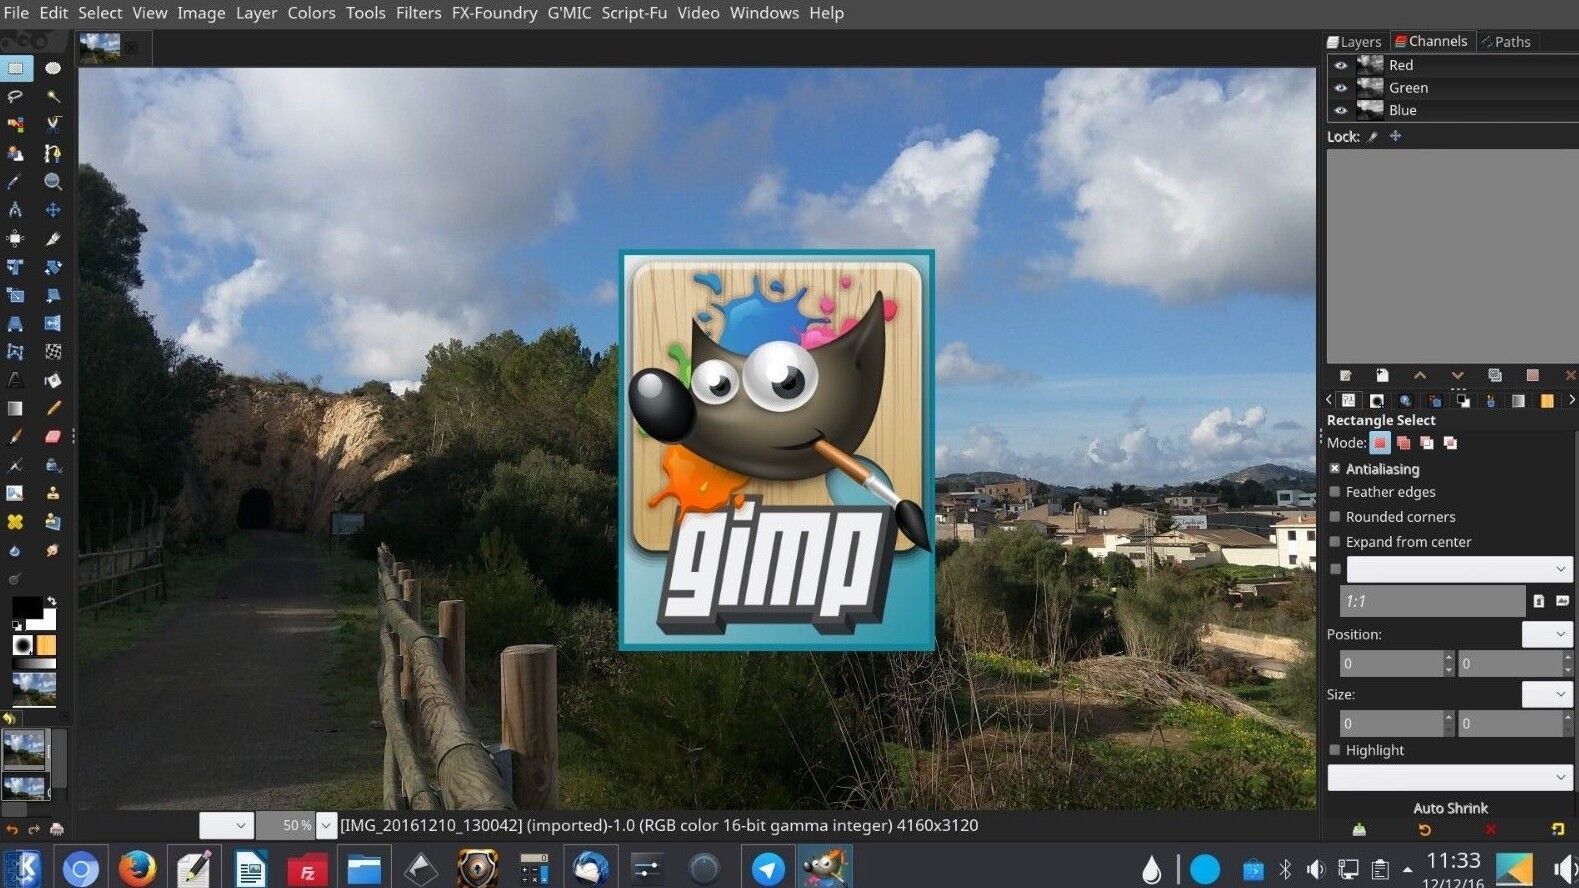 Gimp 2019 Professional Photo Image Editing Software Photo Shop Compatable on USB